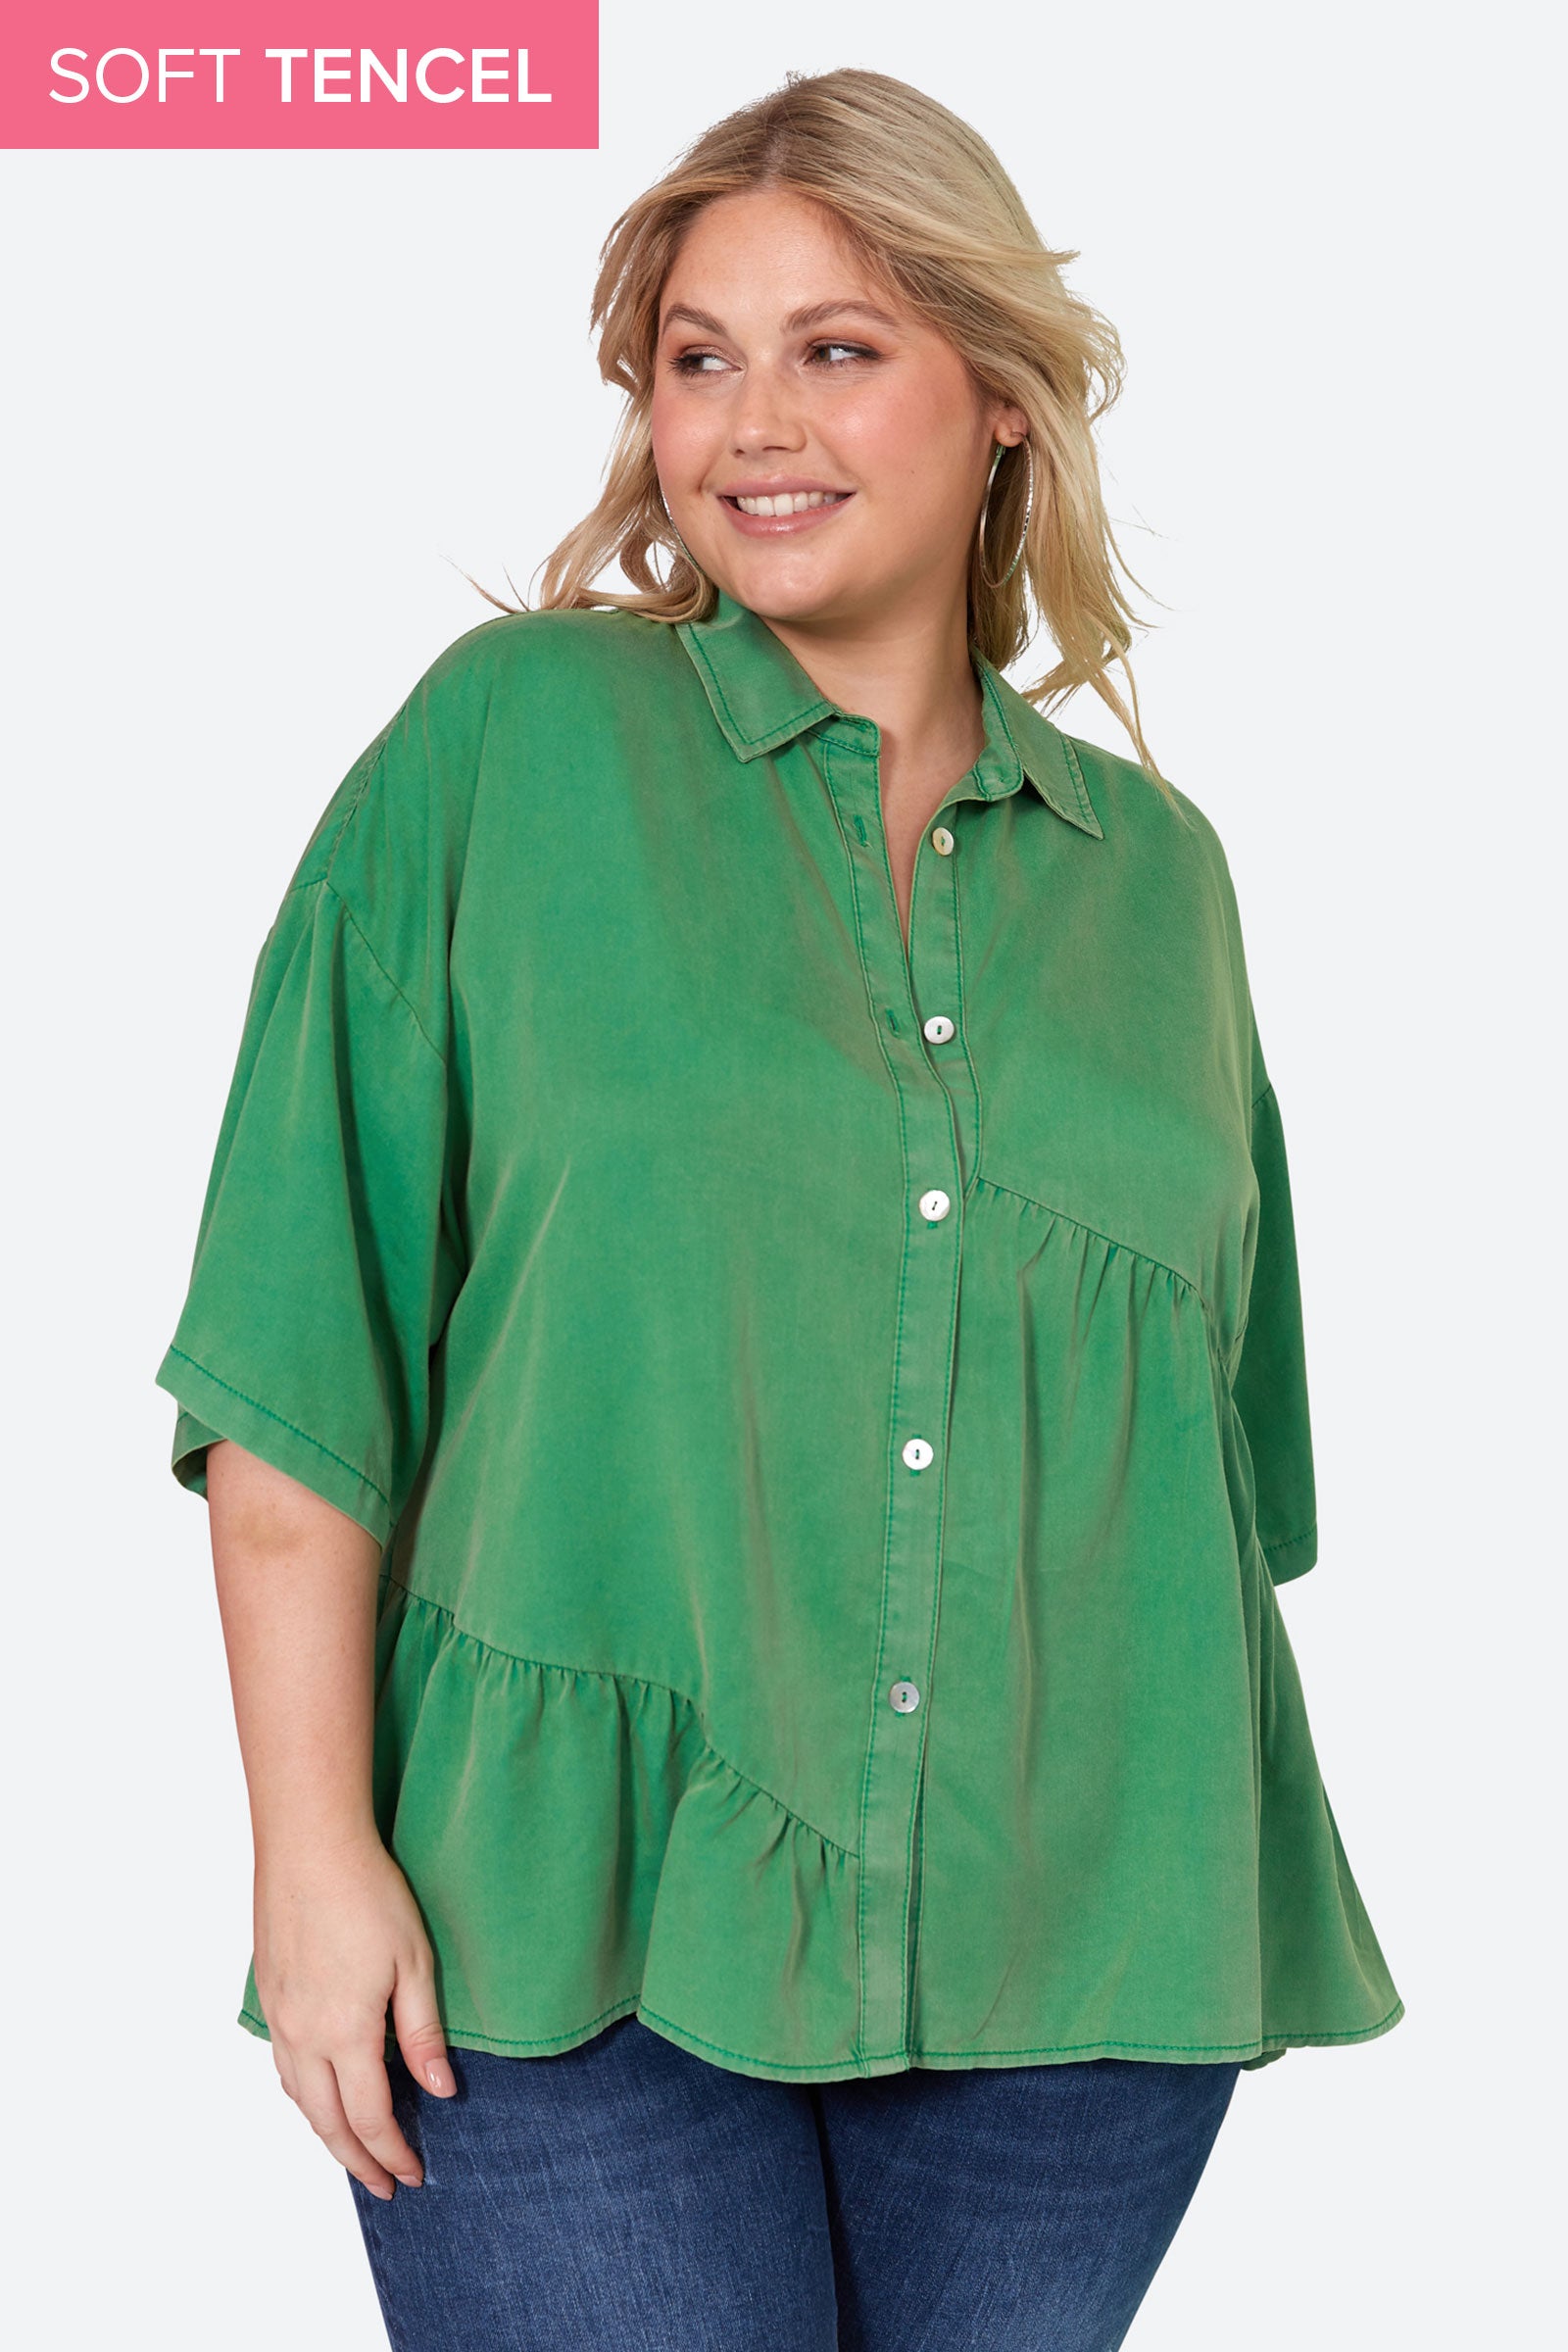 Elan Shirt - Meadow - eb&ive Clothing - Shirt One Size